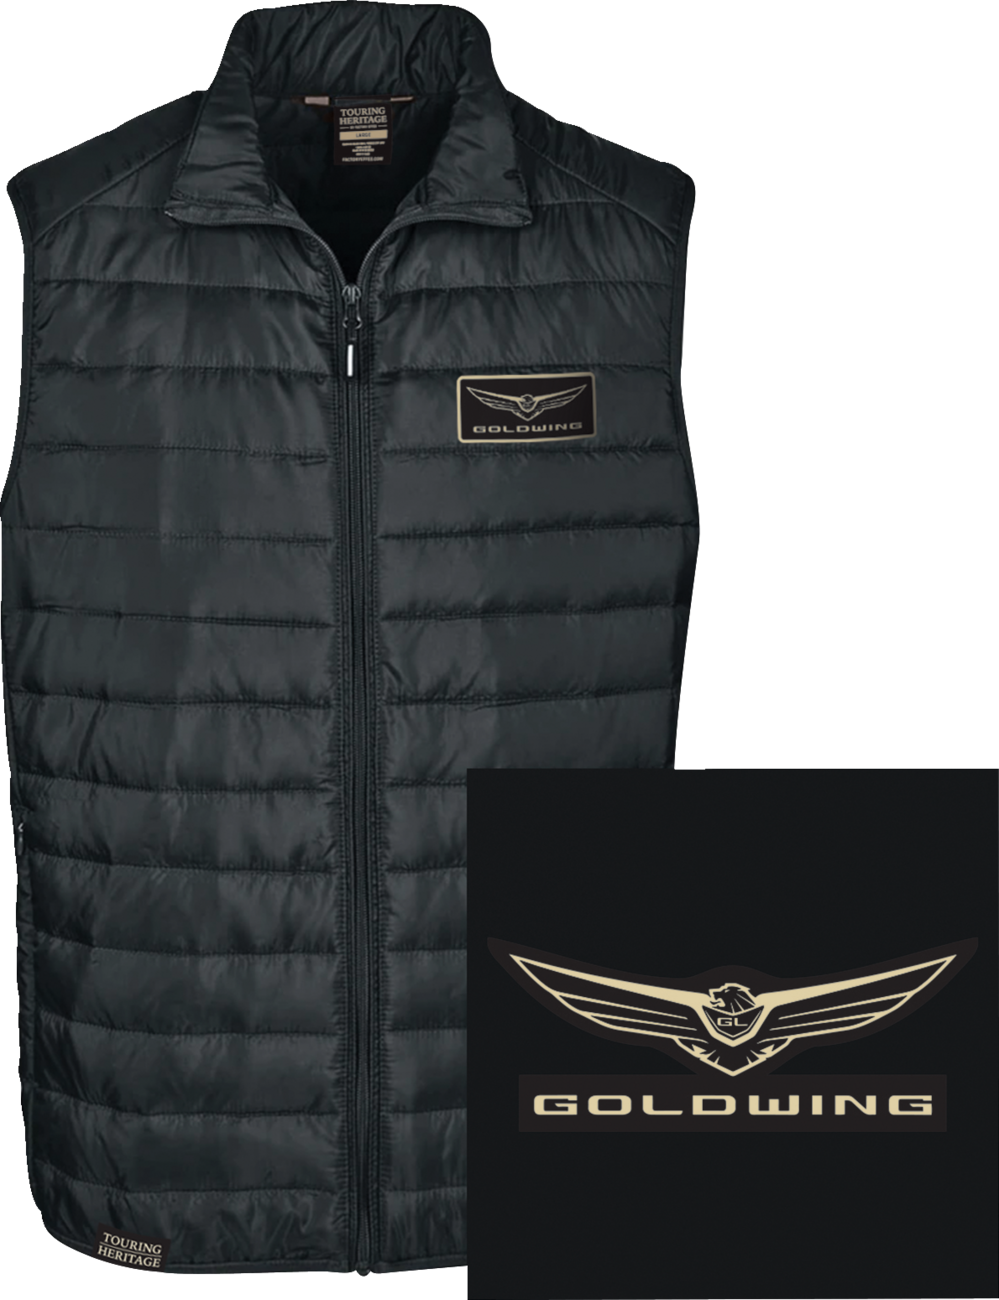 FACTORY EFFEX Goldwing Puff Vest - Black - Large 25-85804